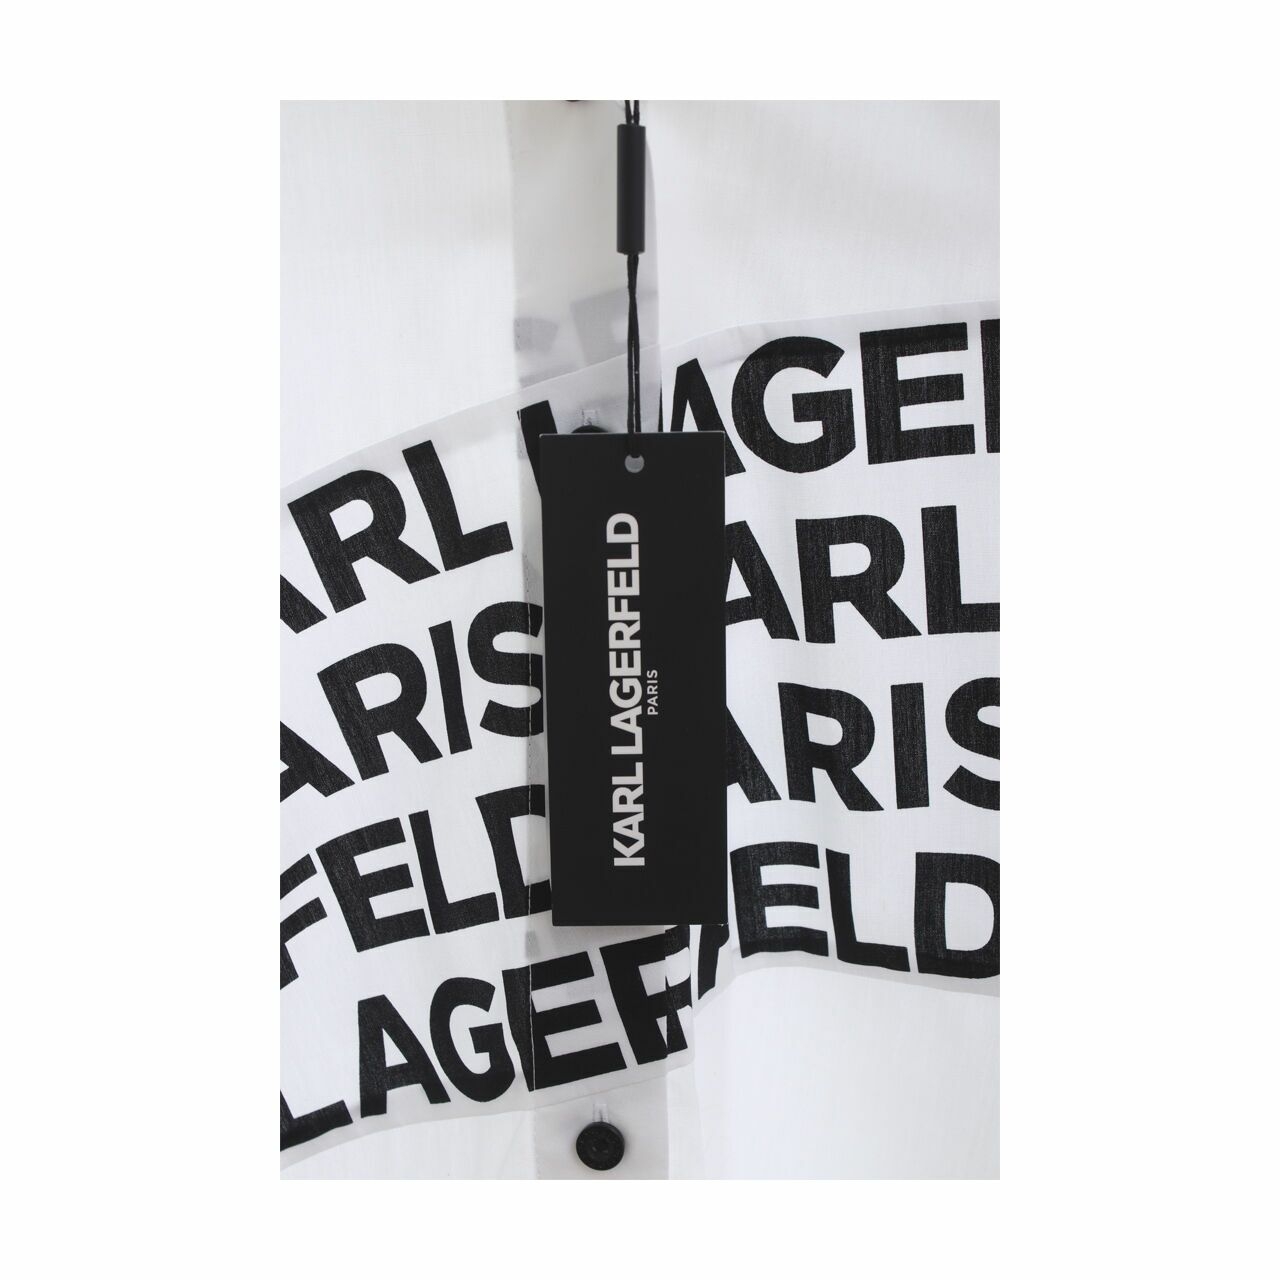 Karl Lagerfeld Essentials Logo White Shirt